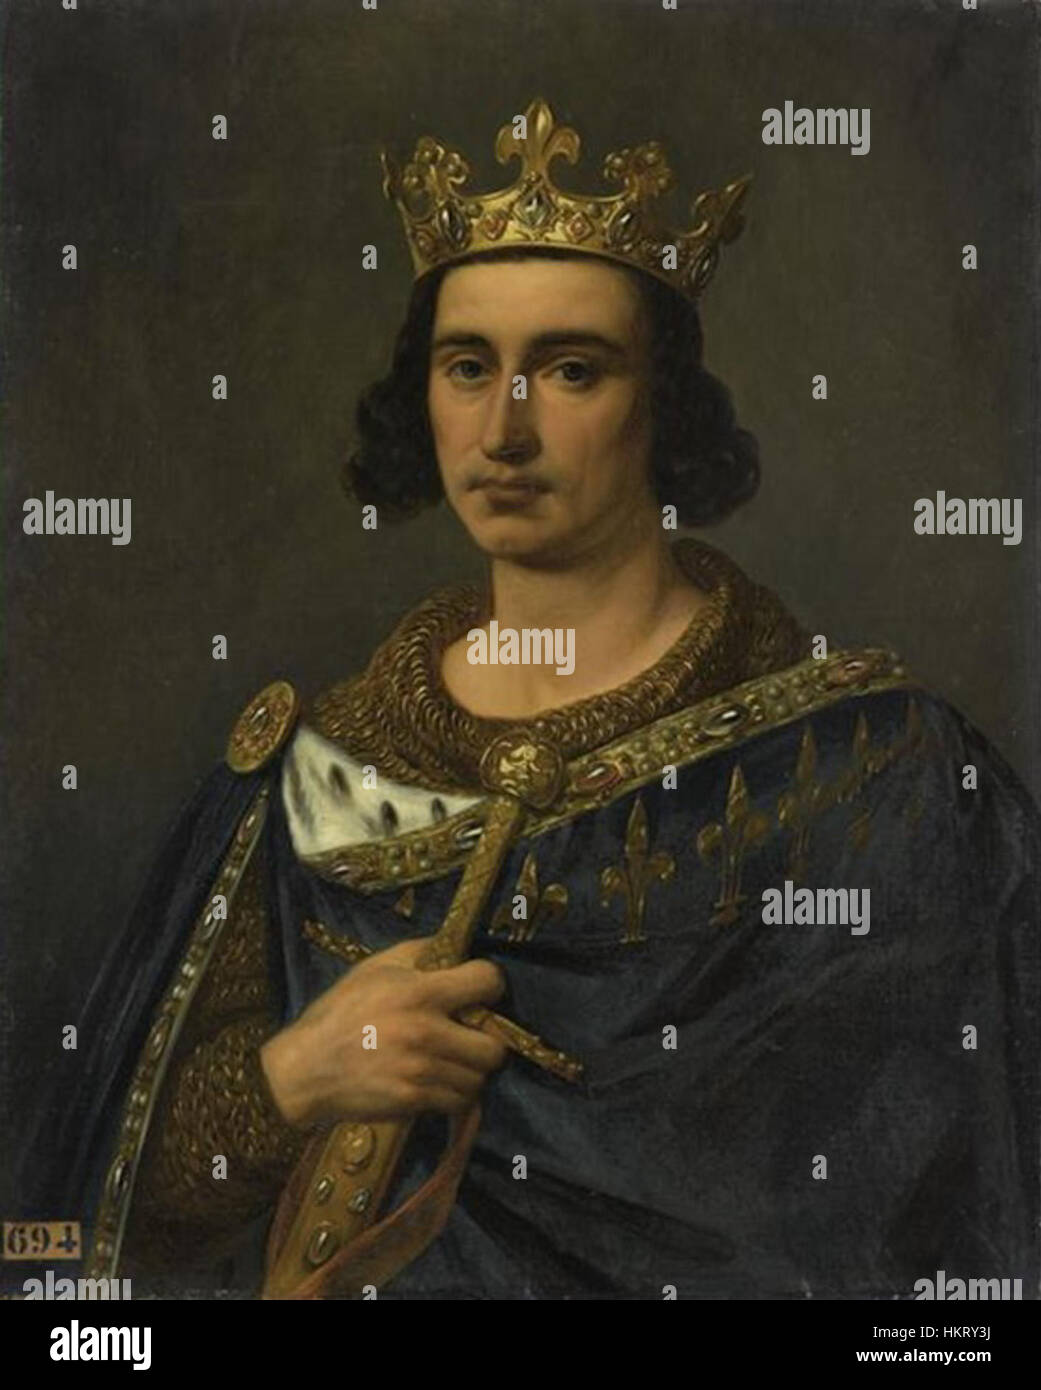 Decreuse - Louis IX of France Stock Photo